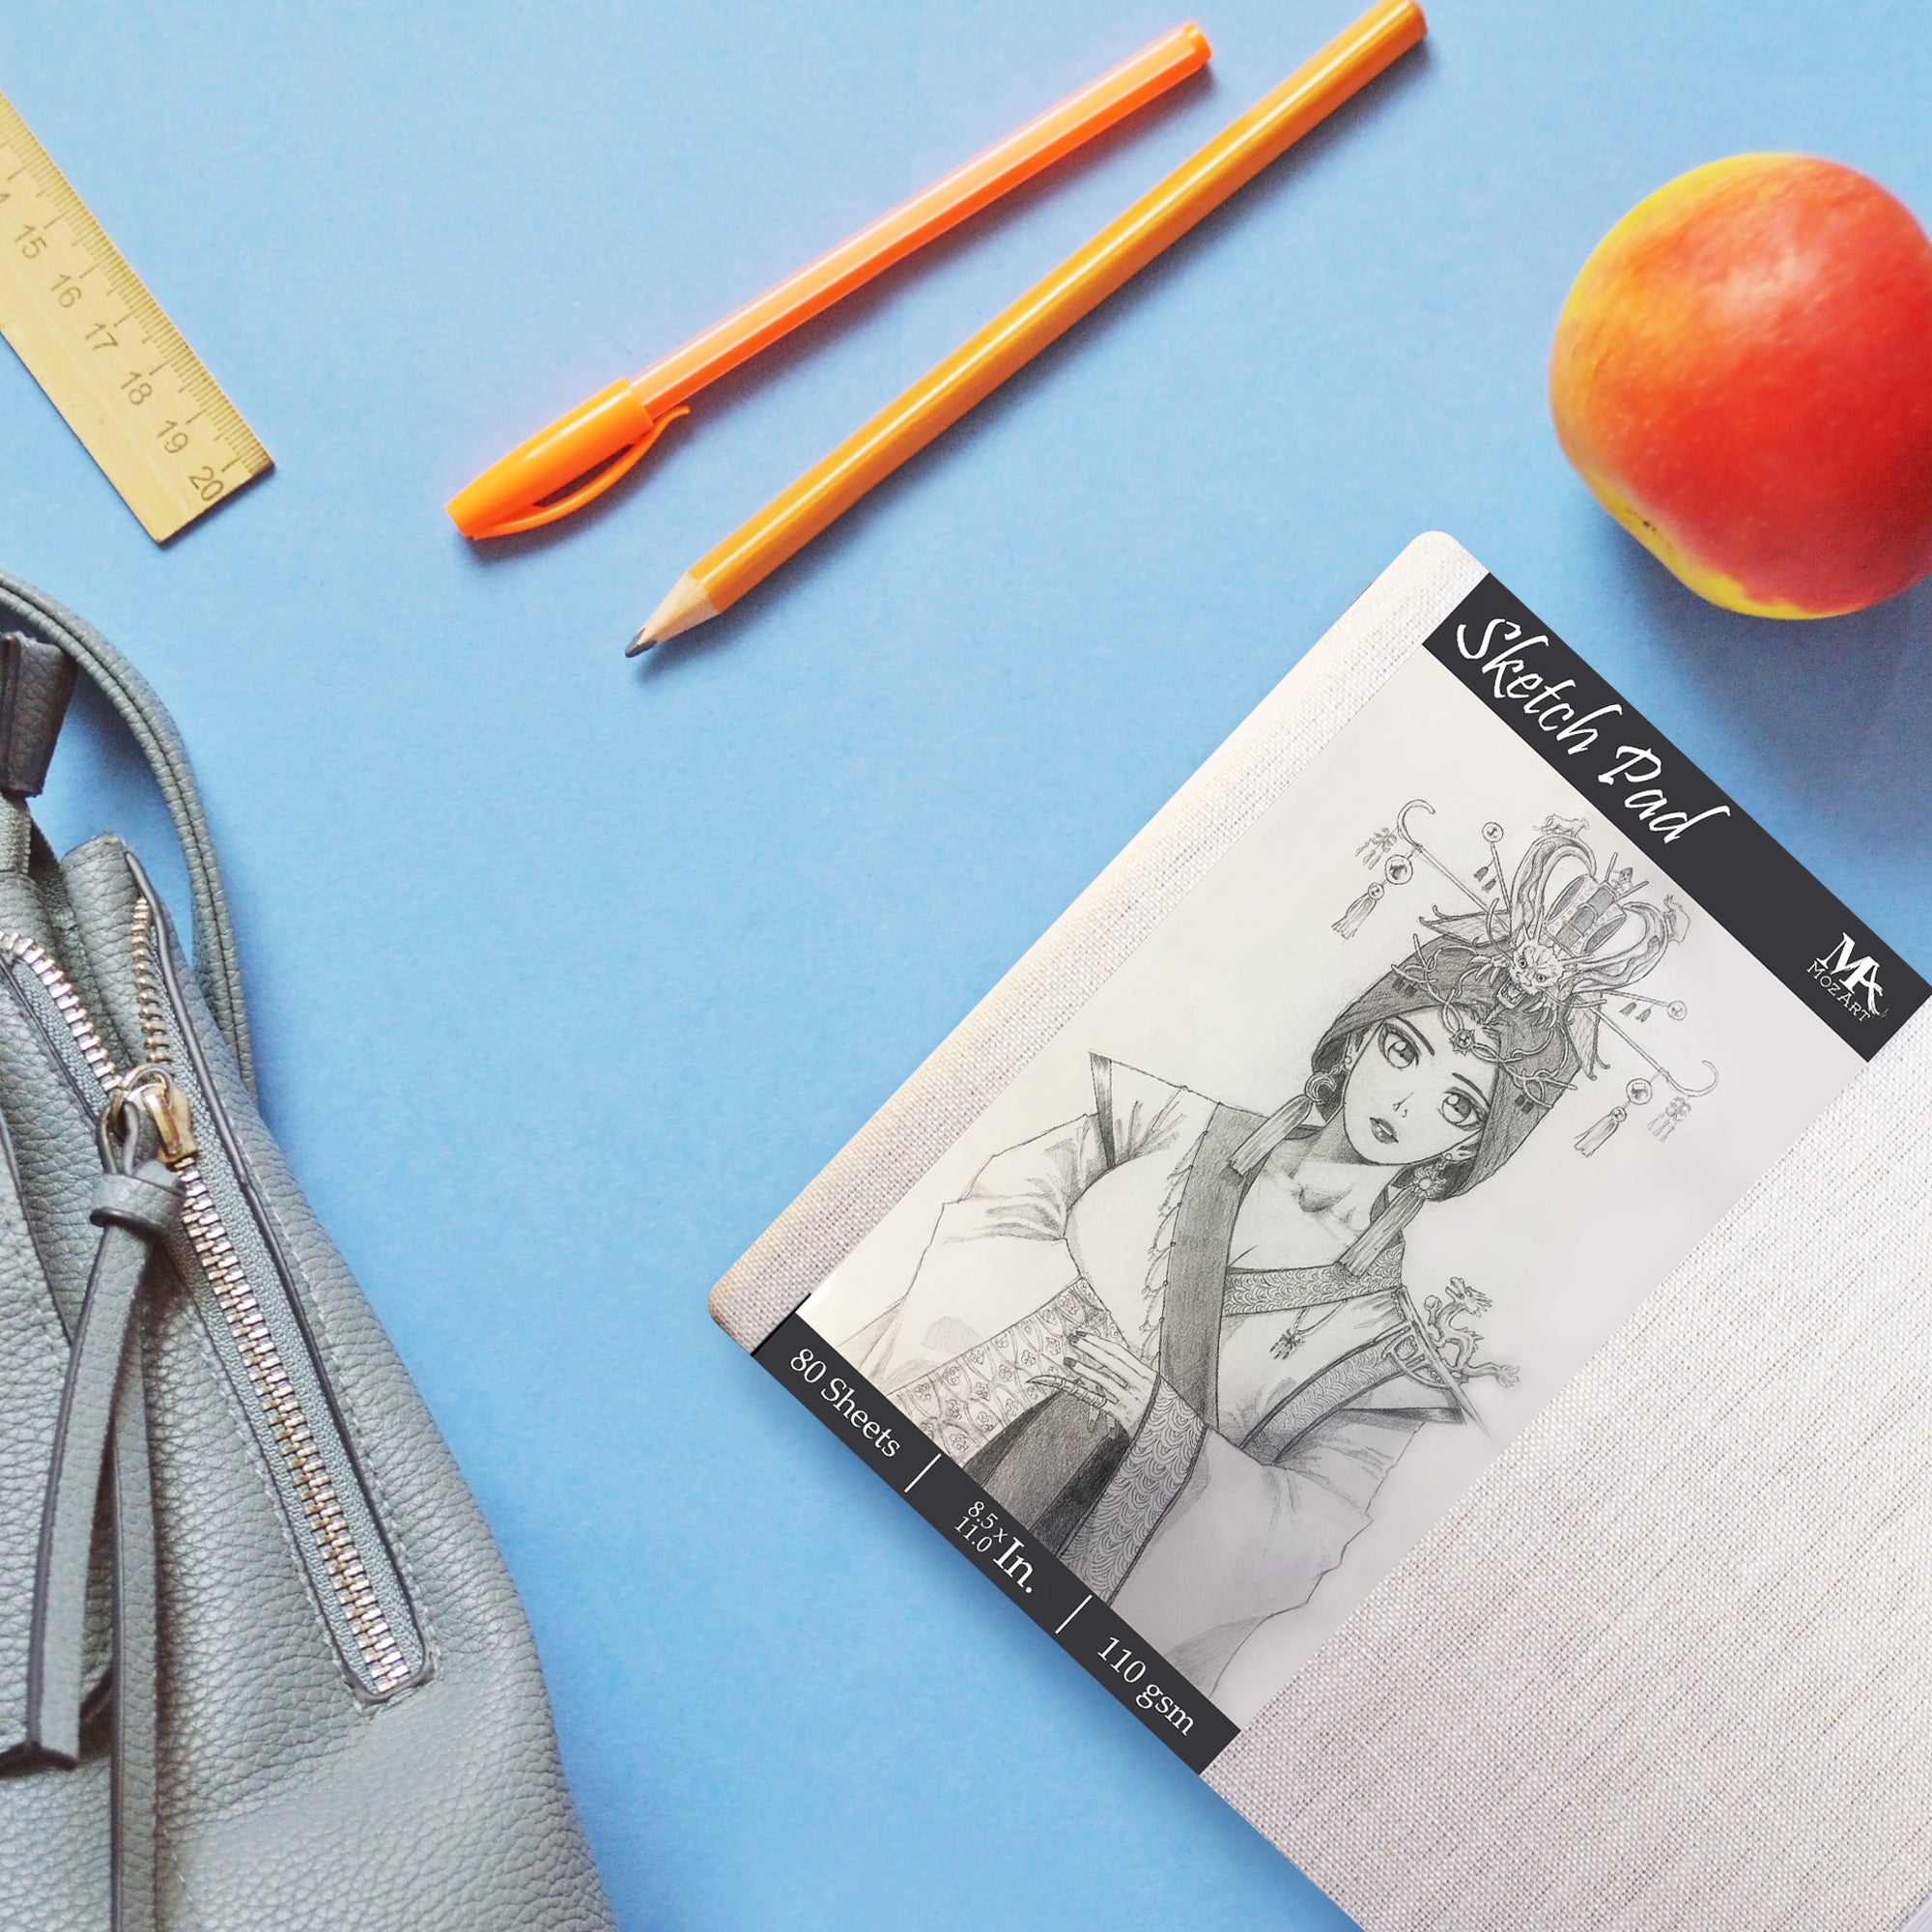 Scholar Sketch Pad A4 , 180 GSM with Drawing Pencils,  Mechanical pencil and Art Eraser - Art set